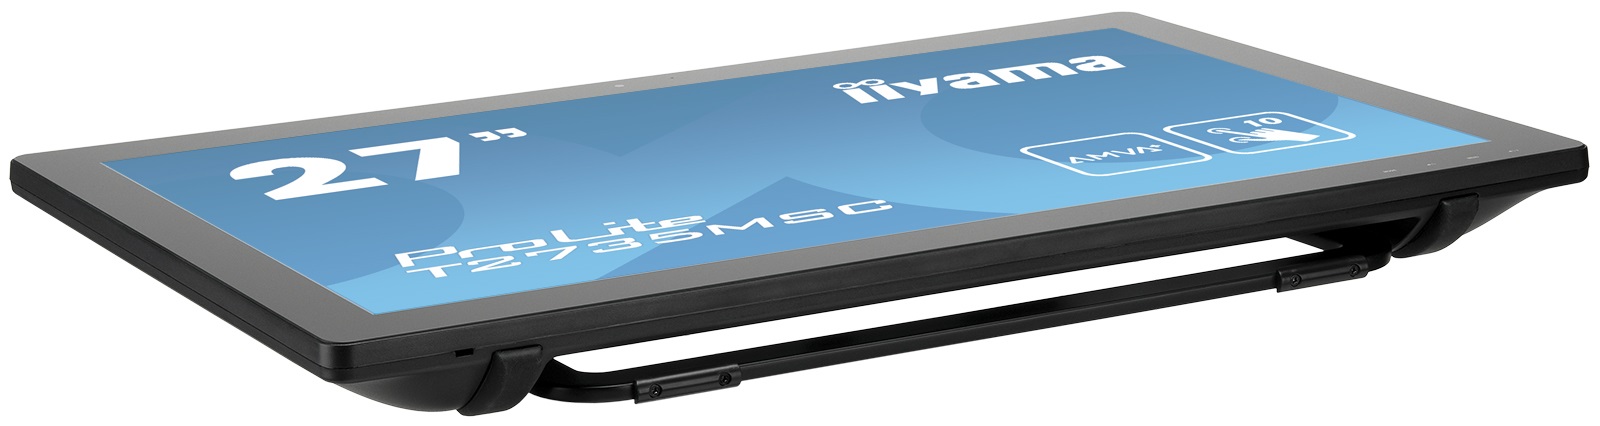 iiyama: monitor jak tablet